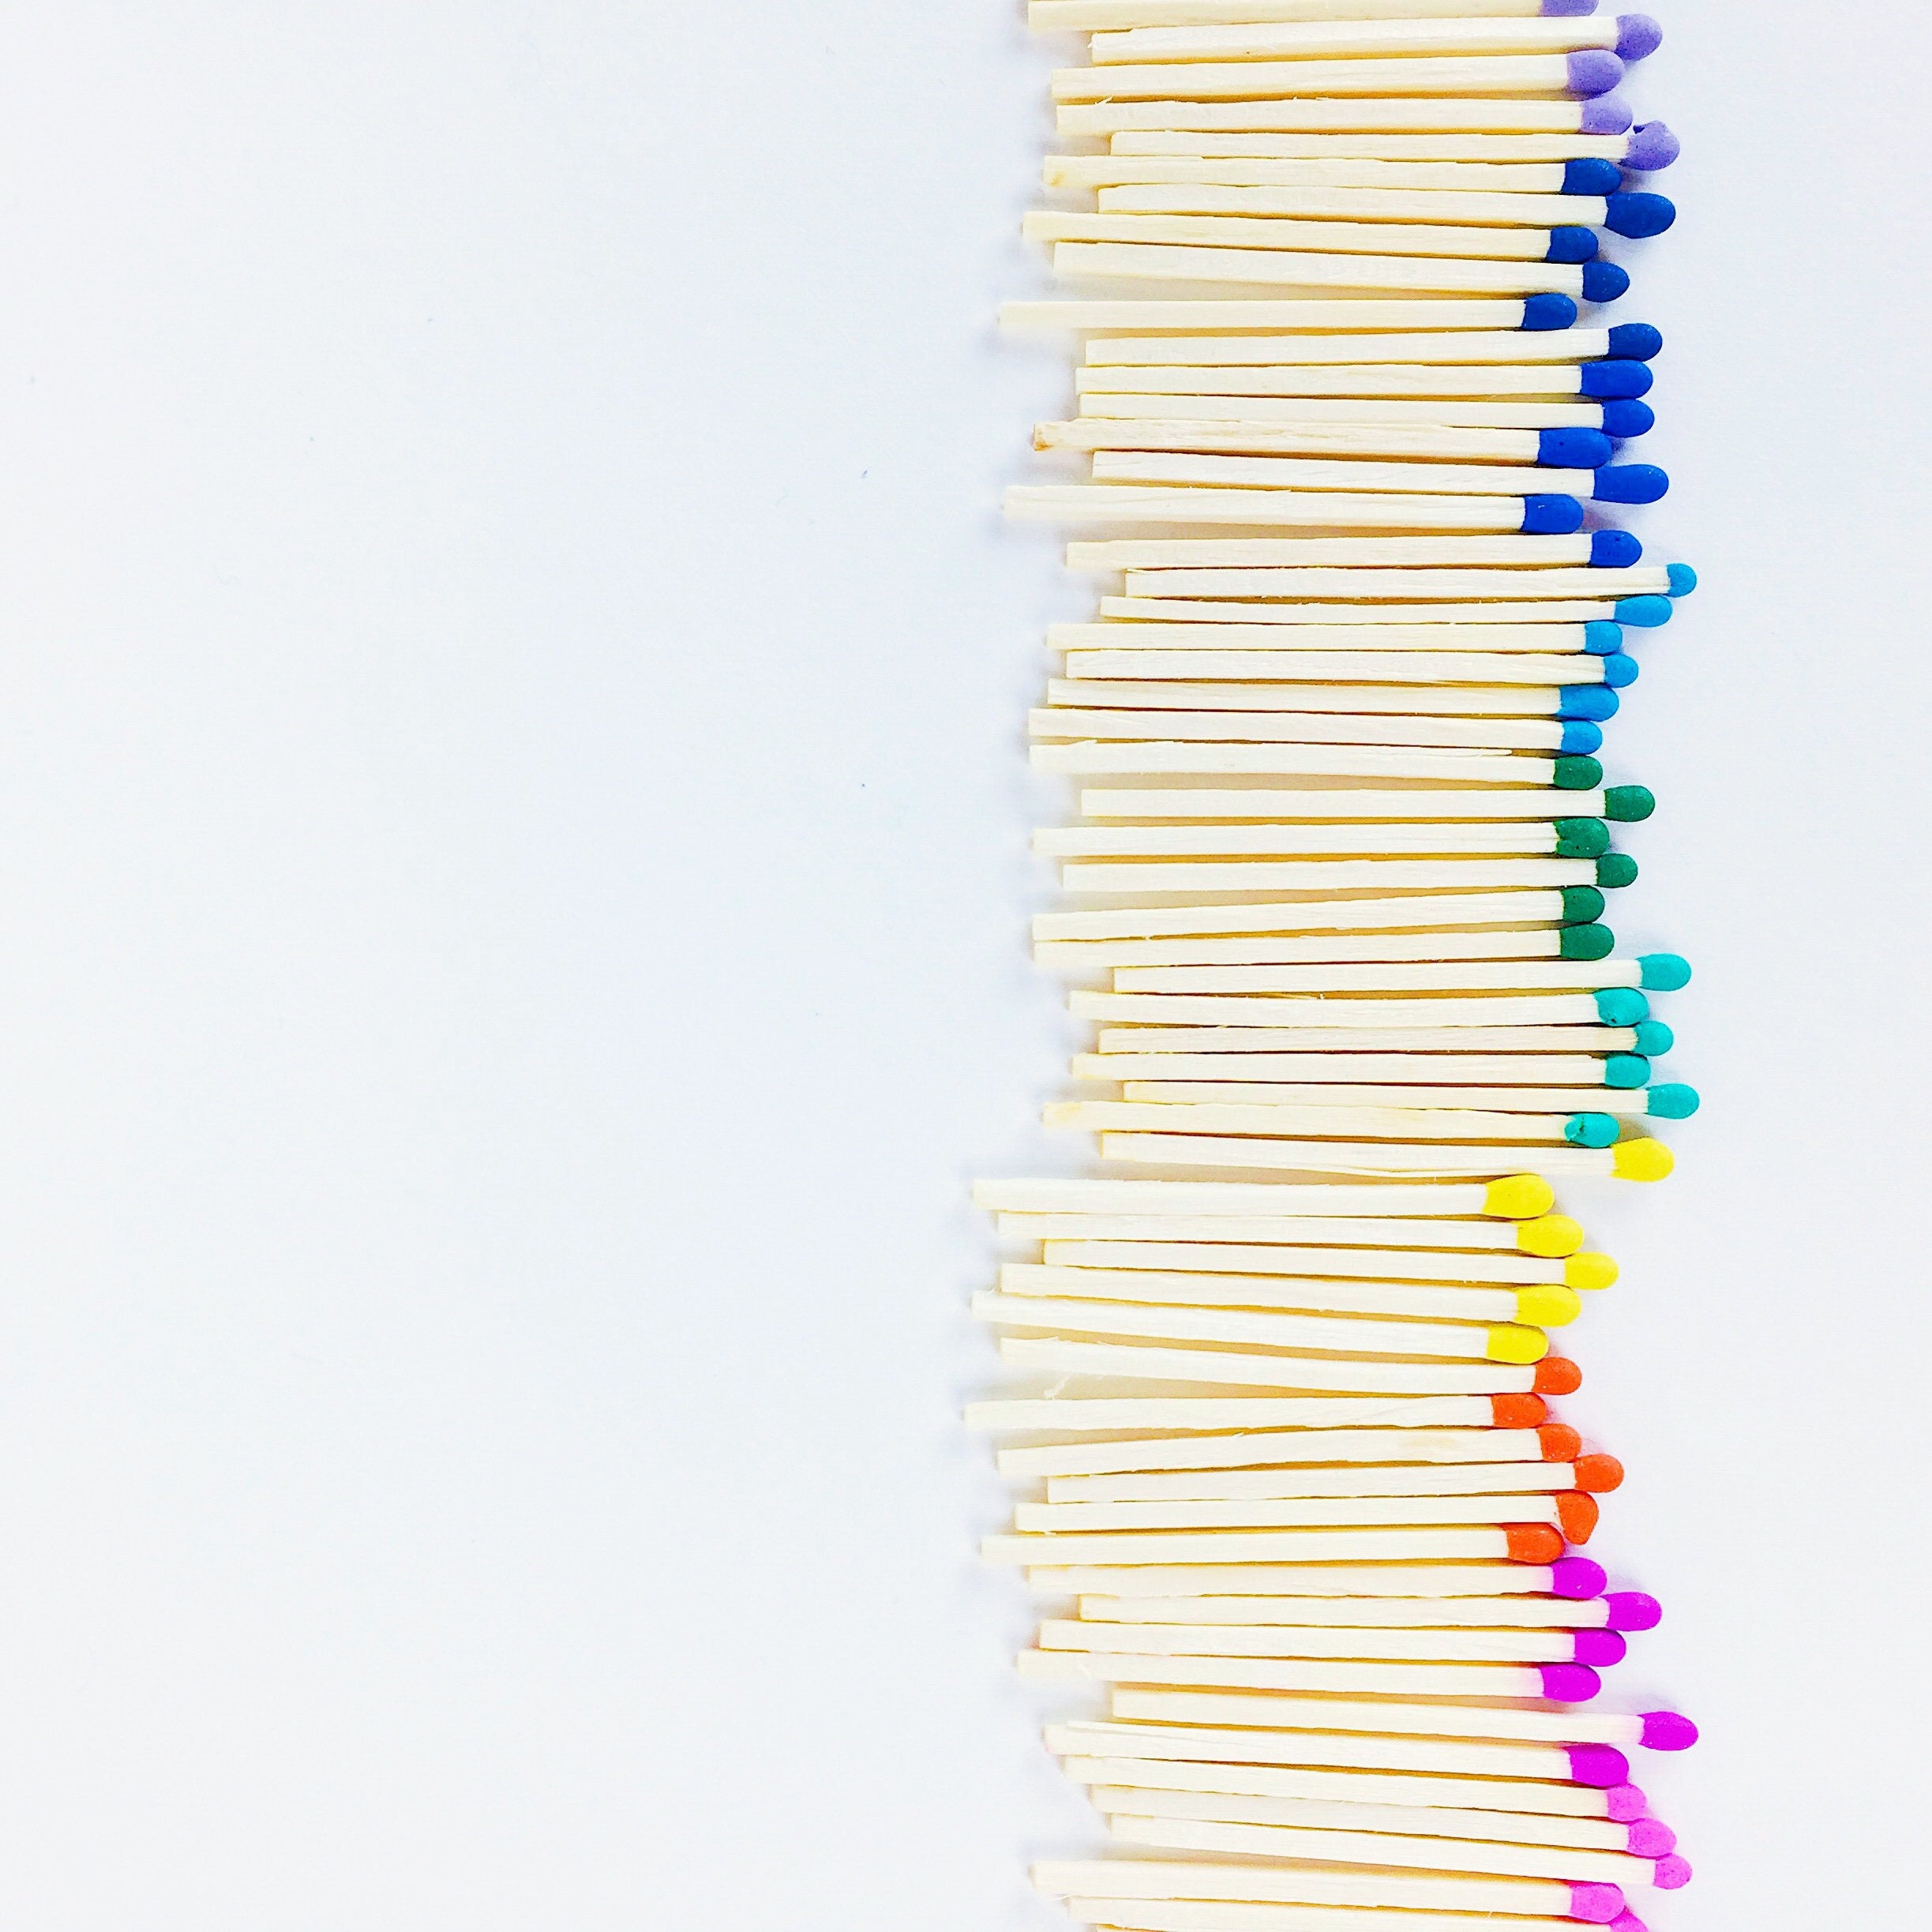 3 Inches Colored Match Sticks - 3 Inches Colored Match Sticks丨FZMATCH